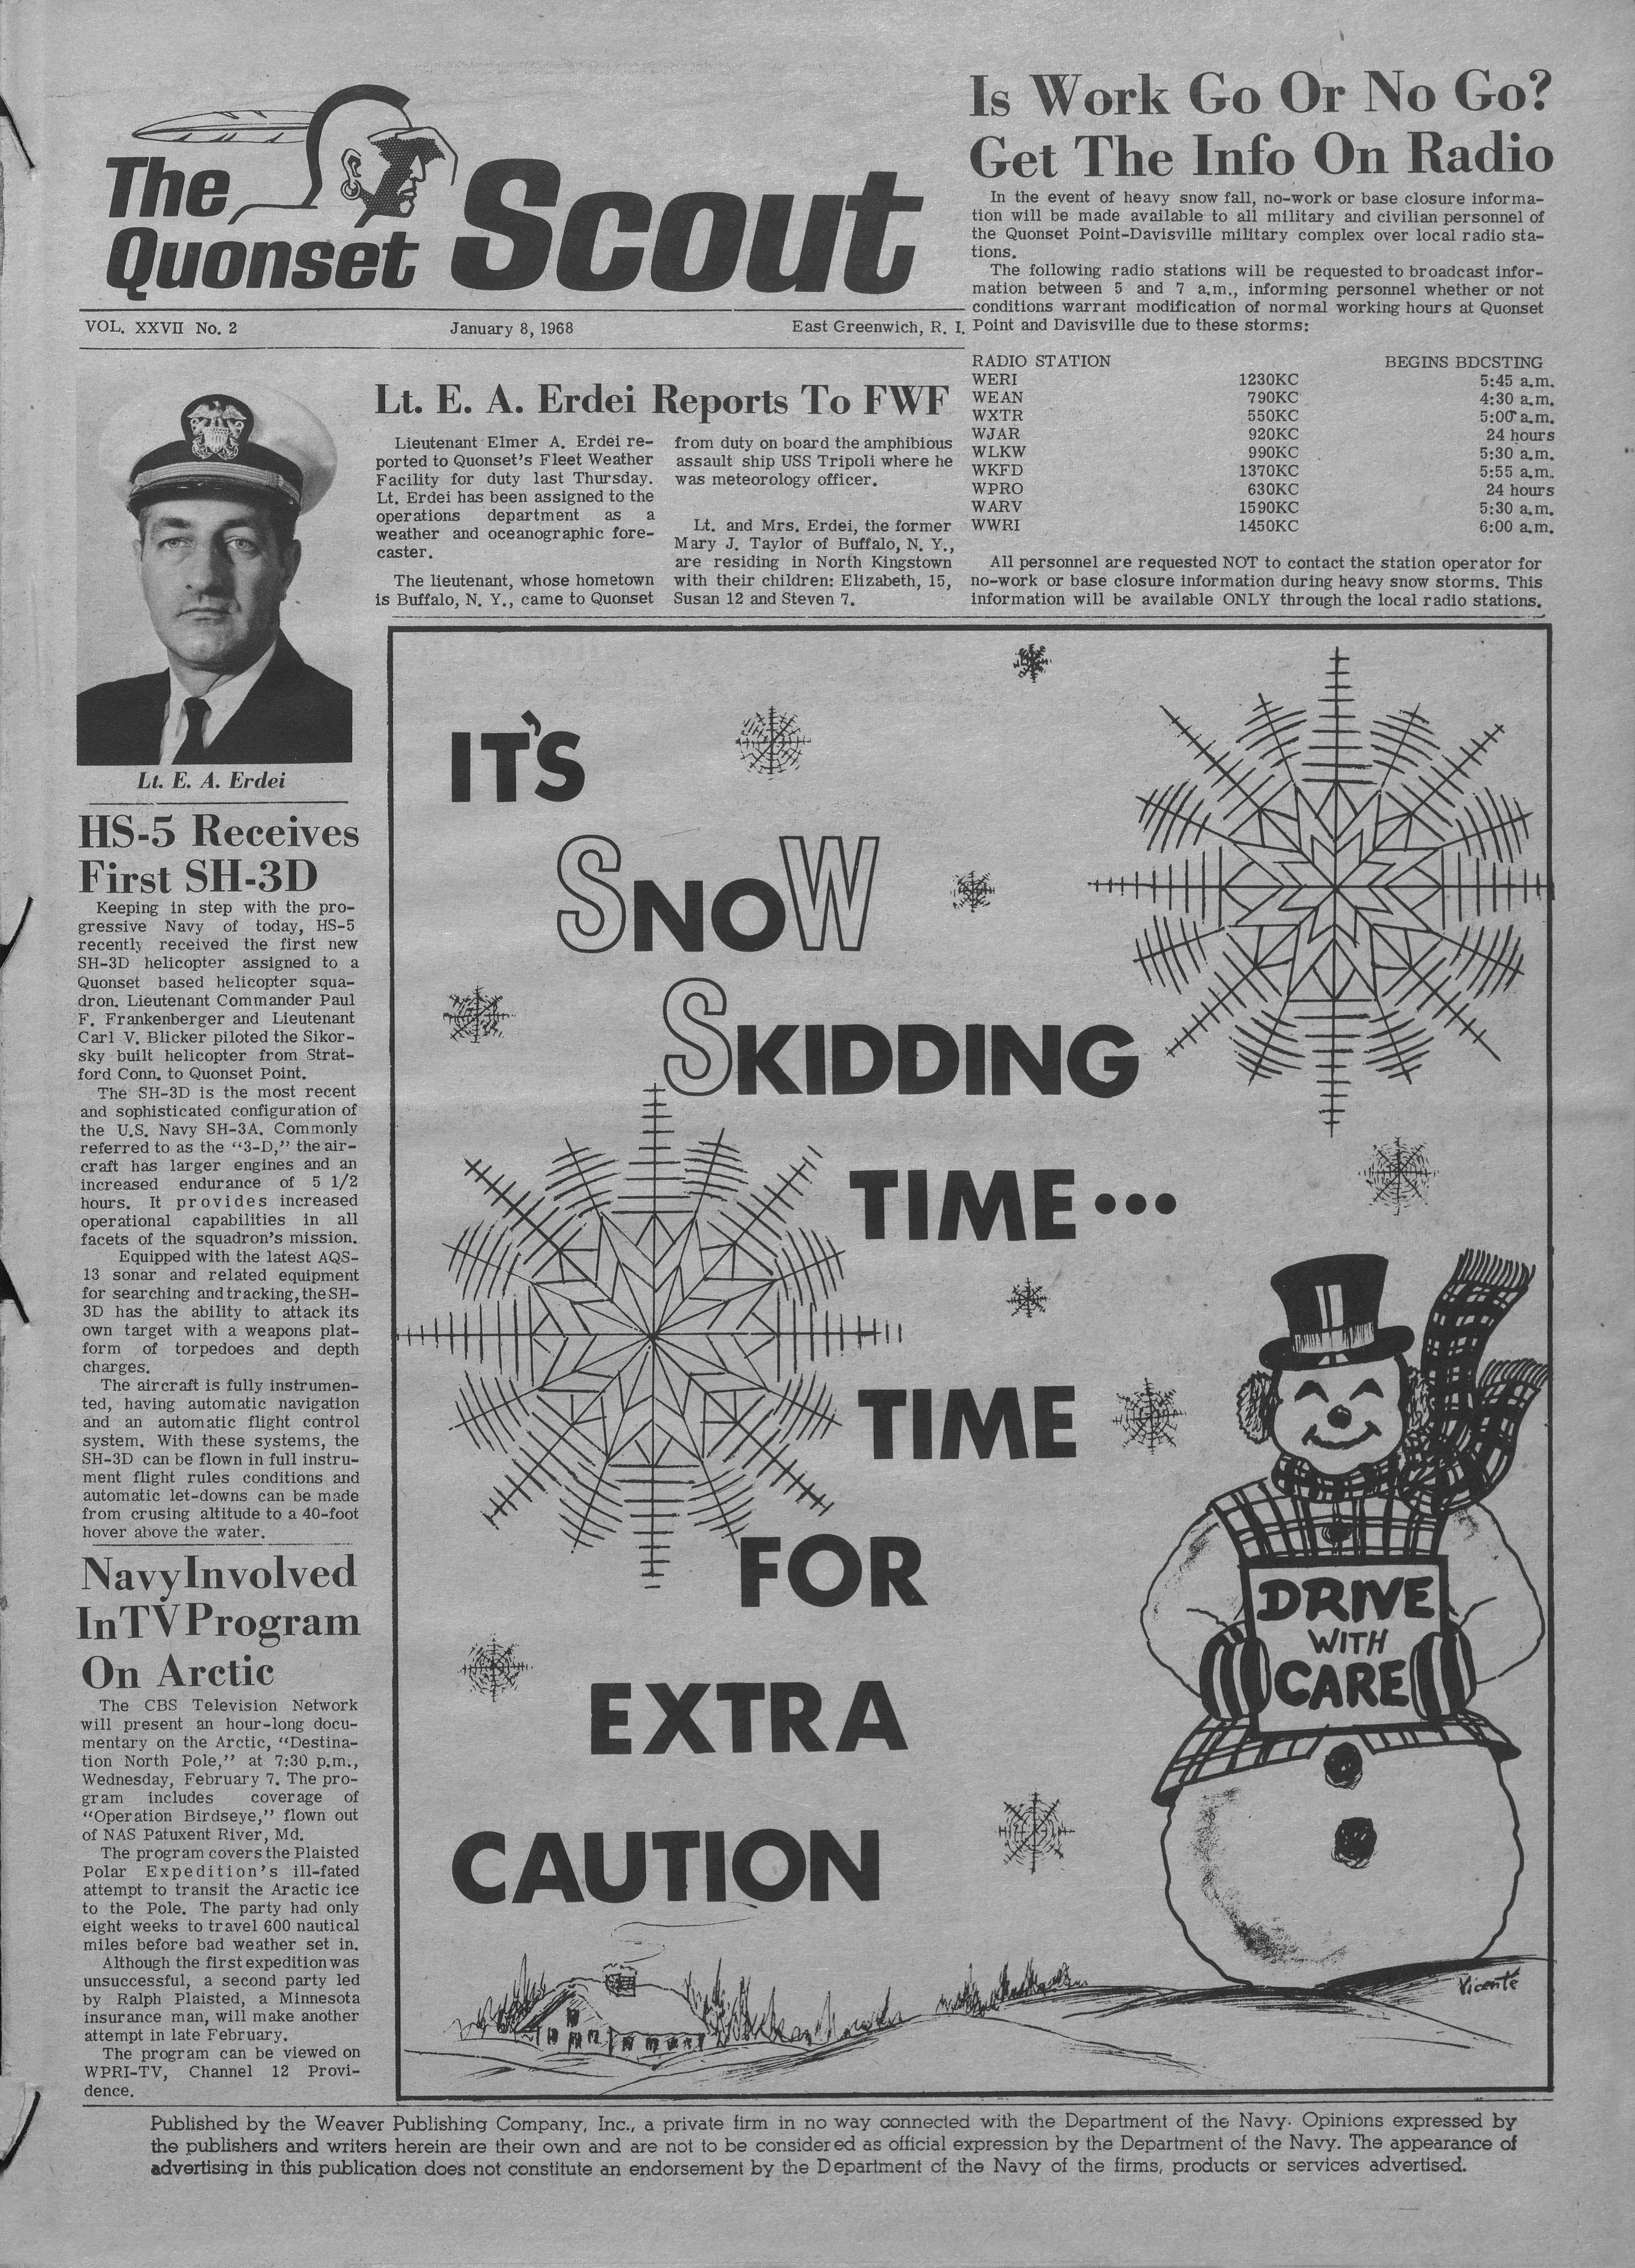 January 8, 1968